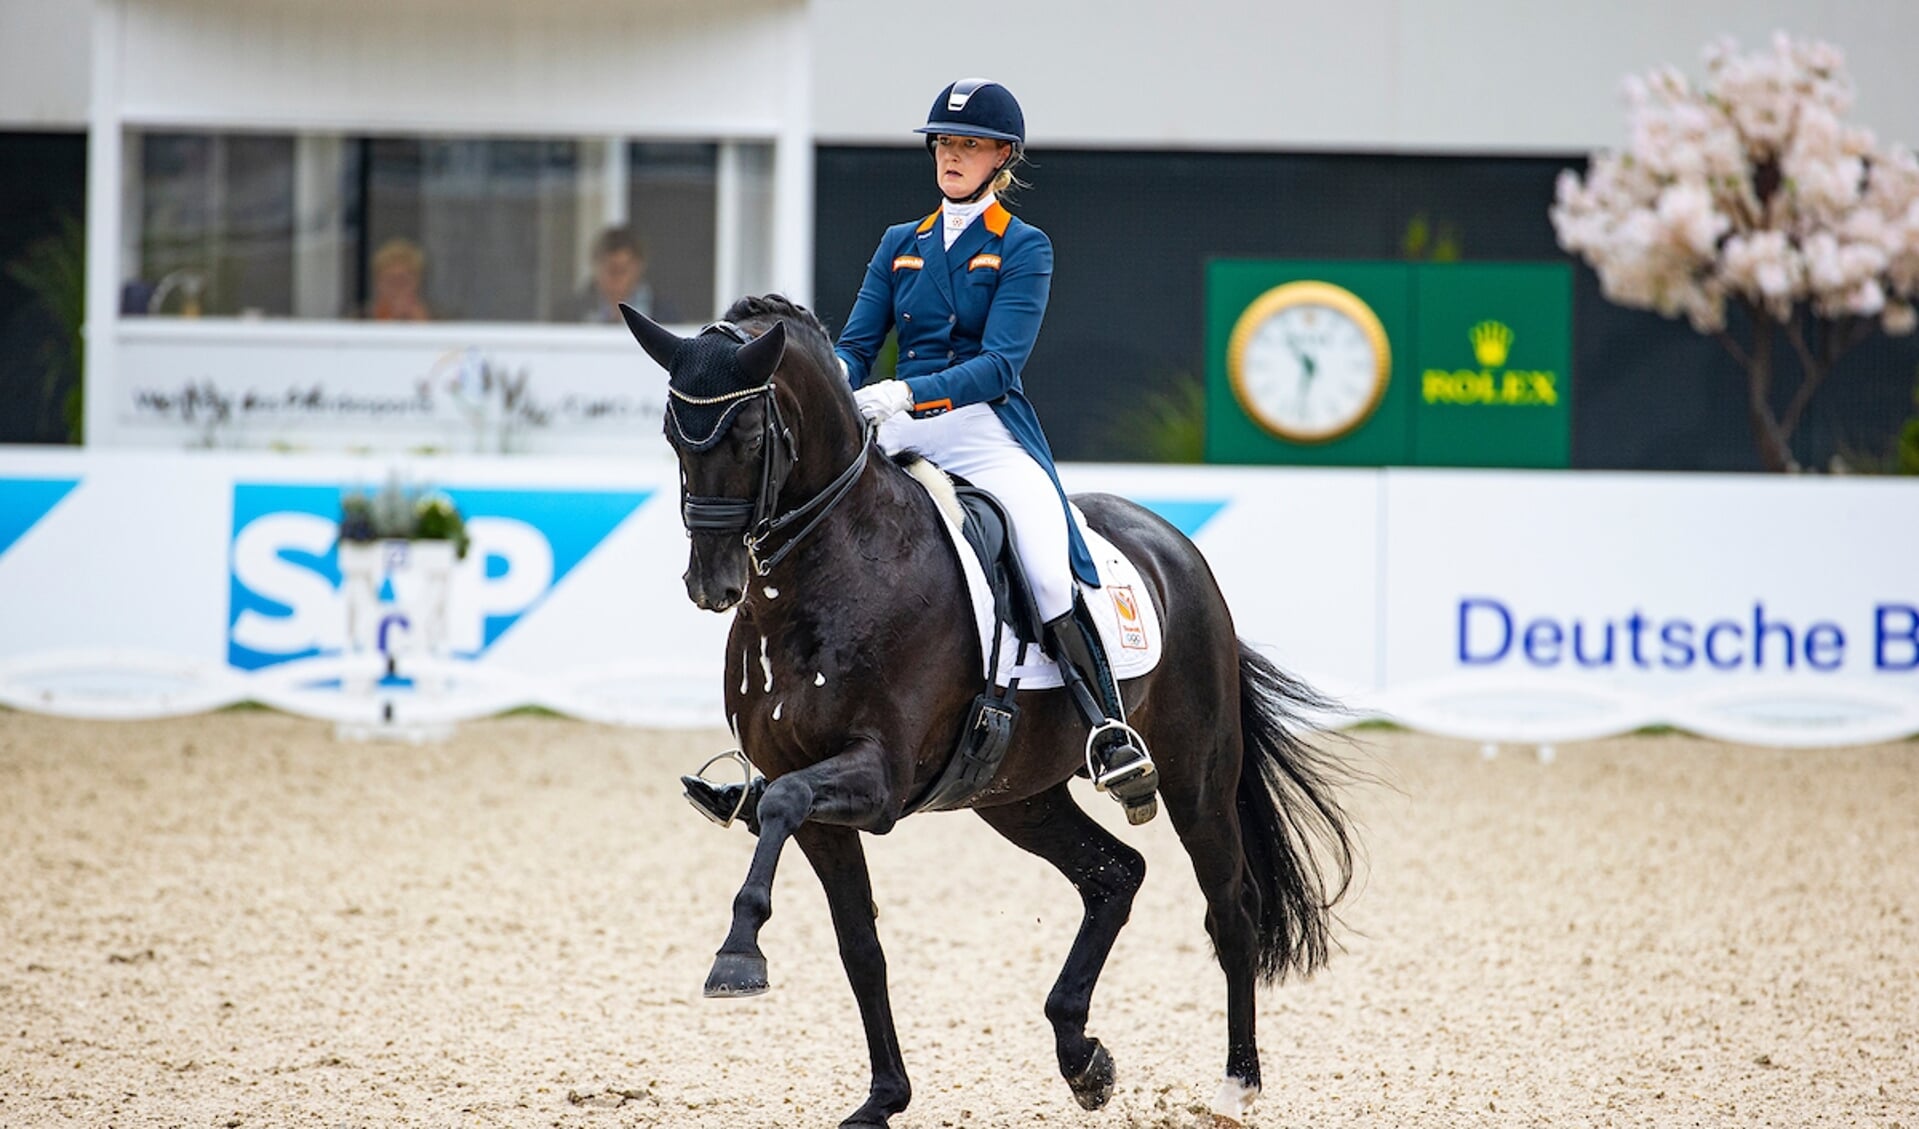 Denise Nekeman - Boston STH
World Equestrian Festival CHIO Aachen 2021
© DigiShots